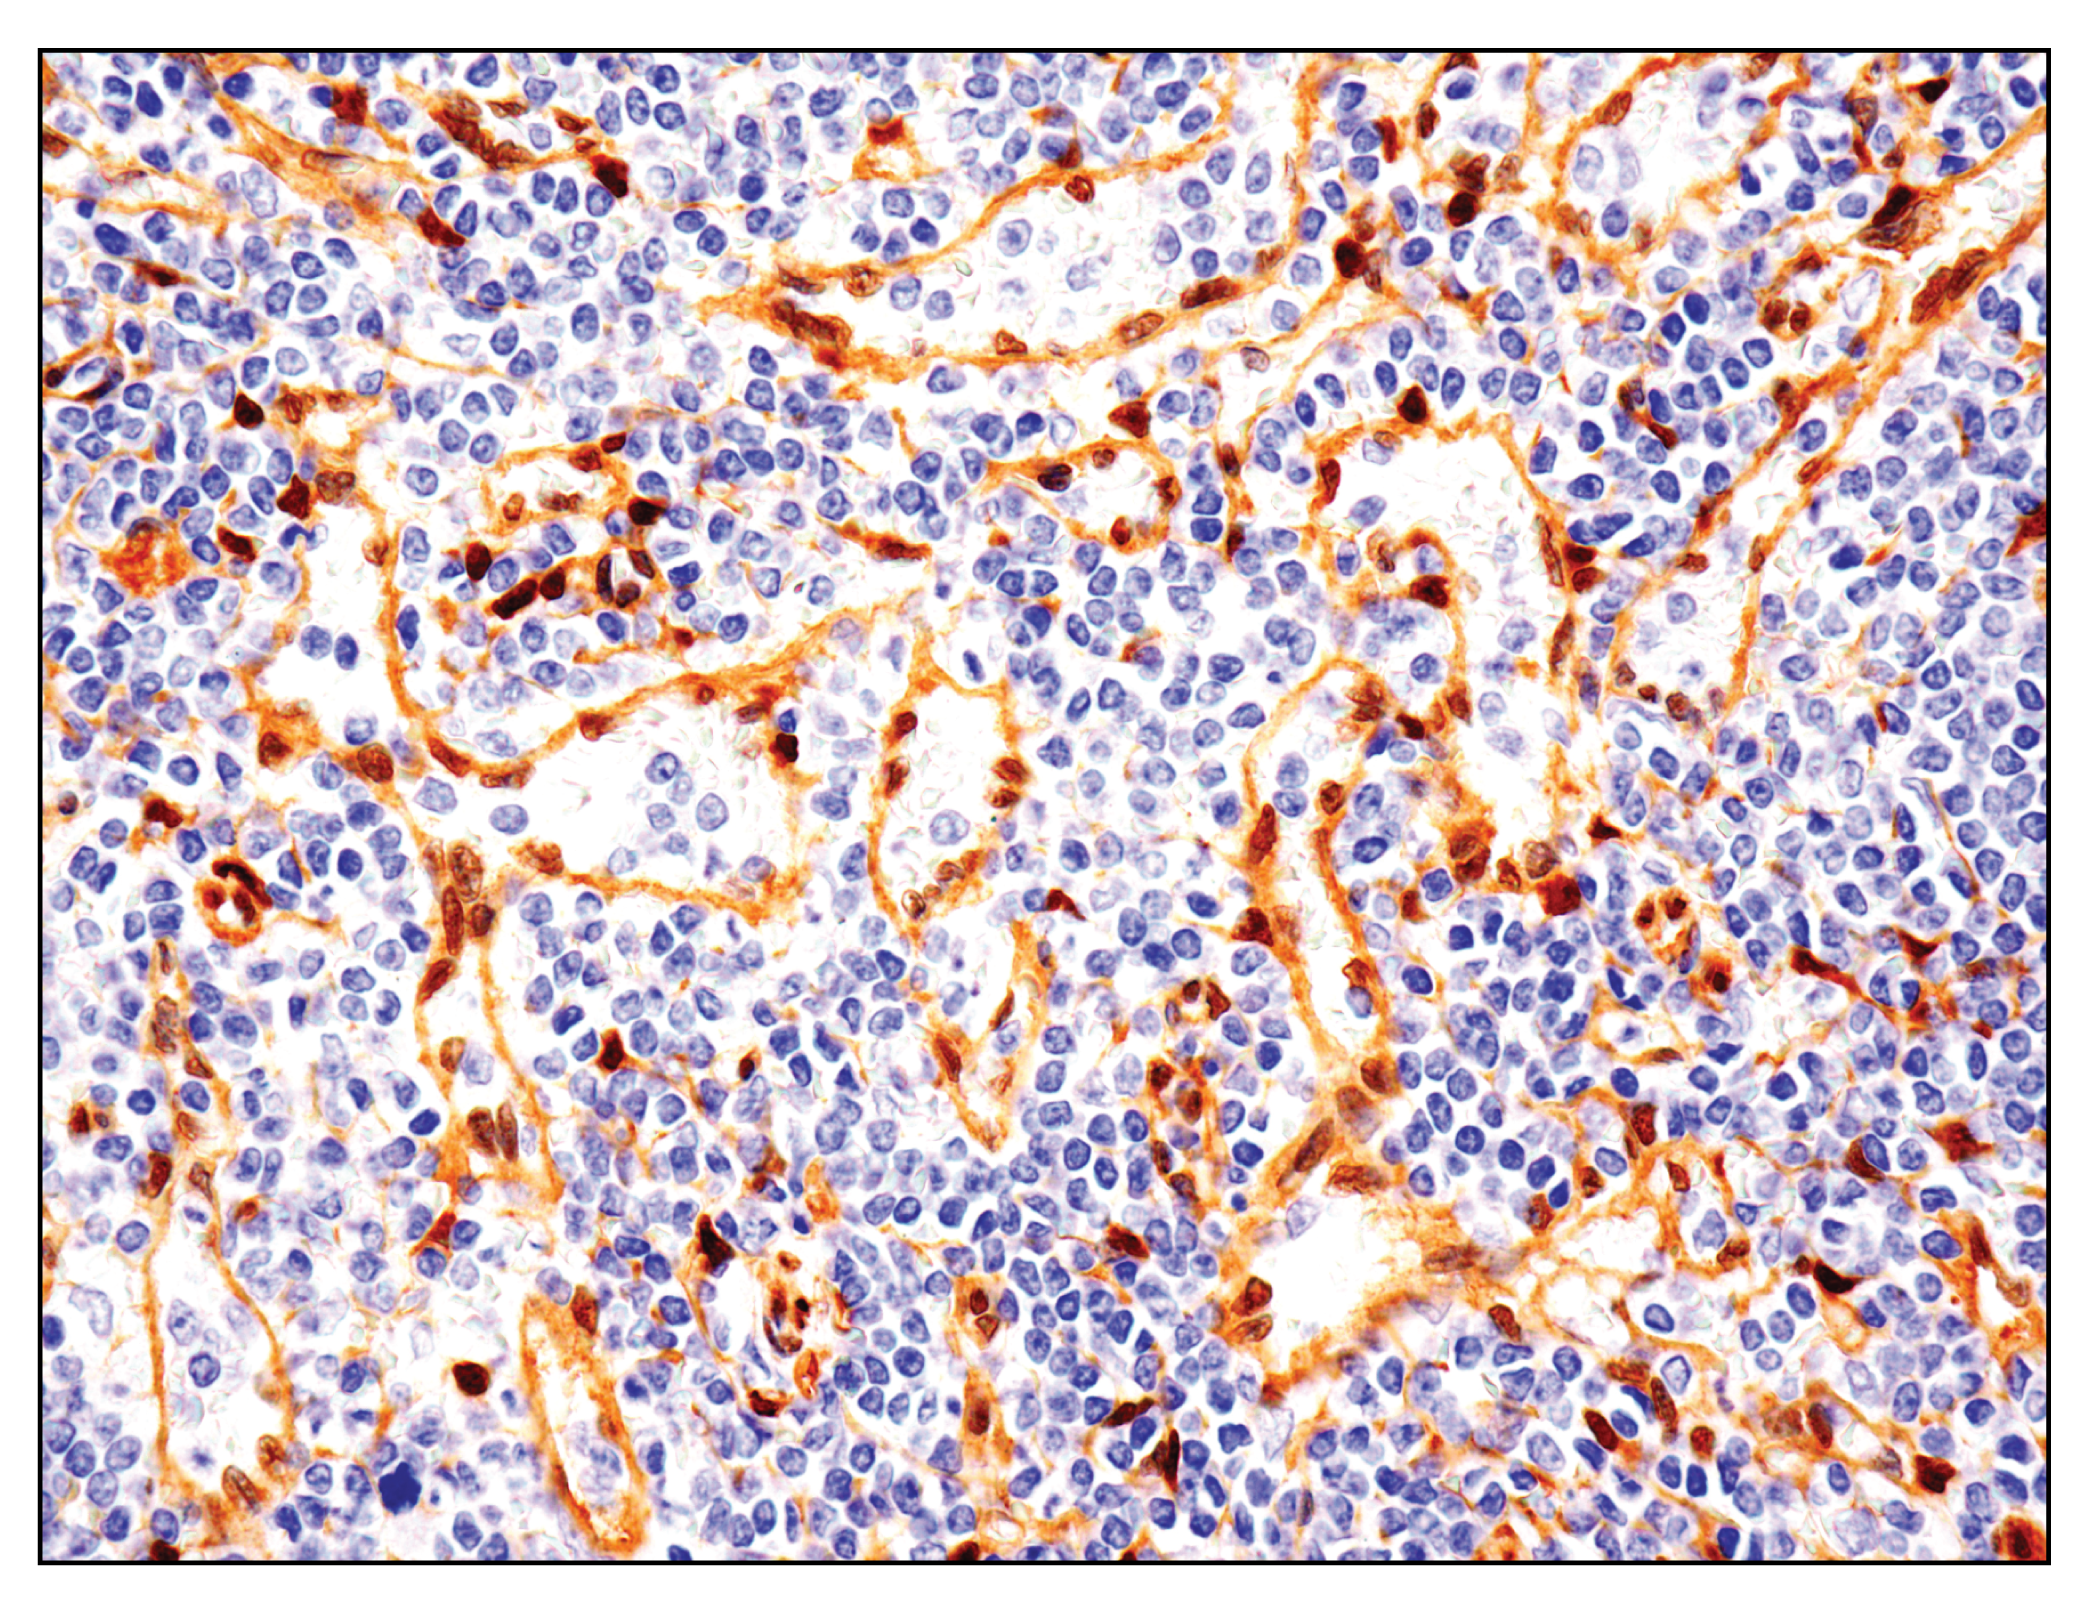  Image 13: PhosphoPlus® YAP (Ser127) Antibody Duet